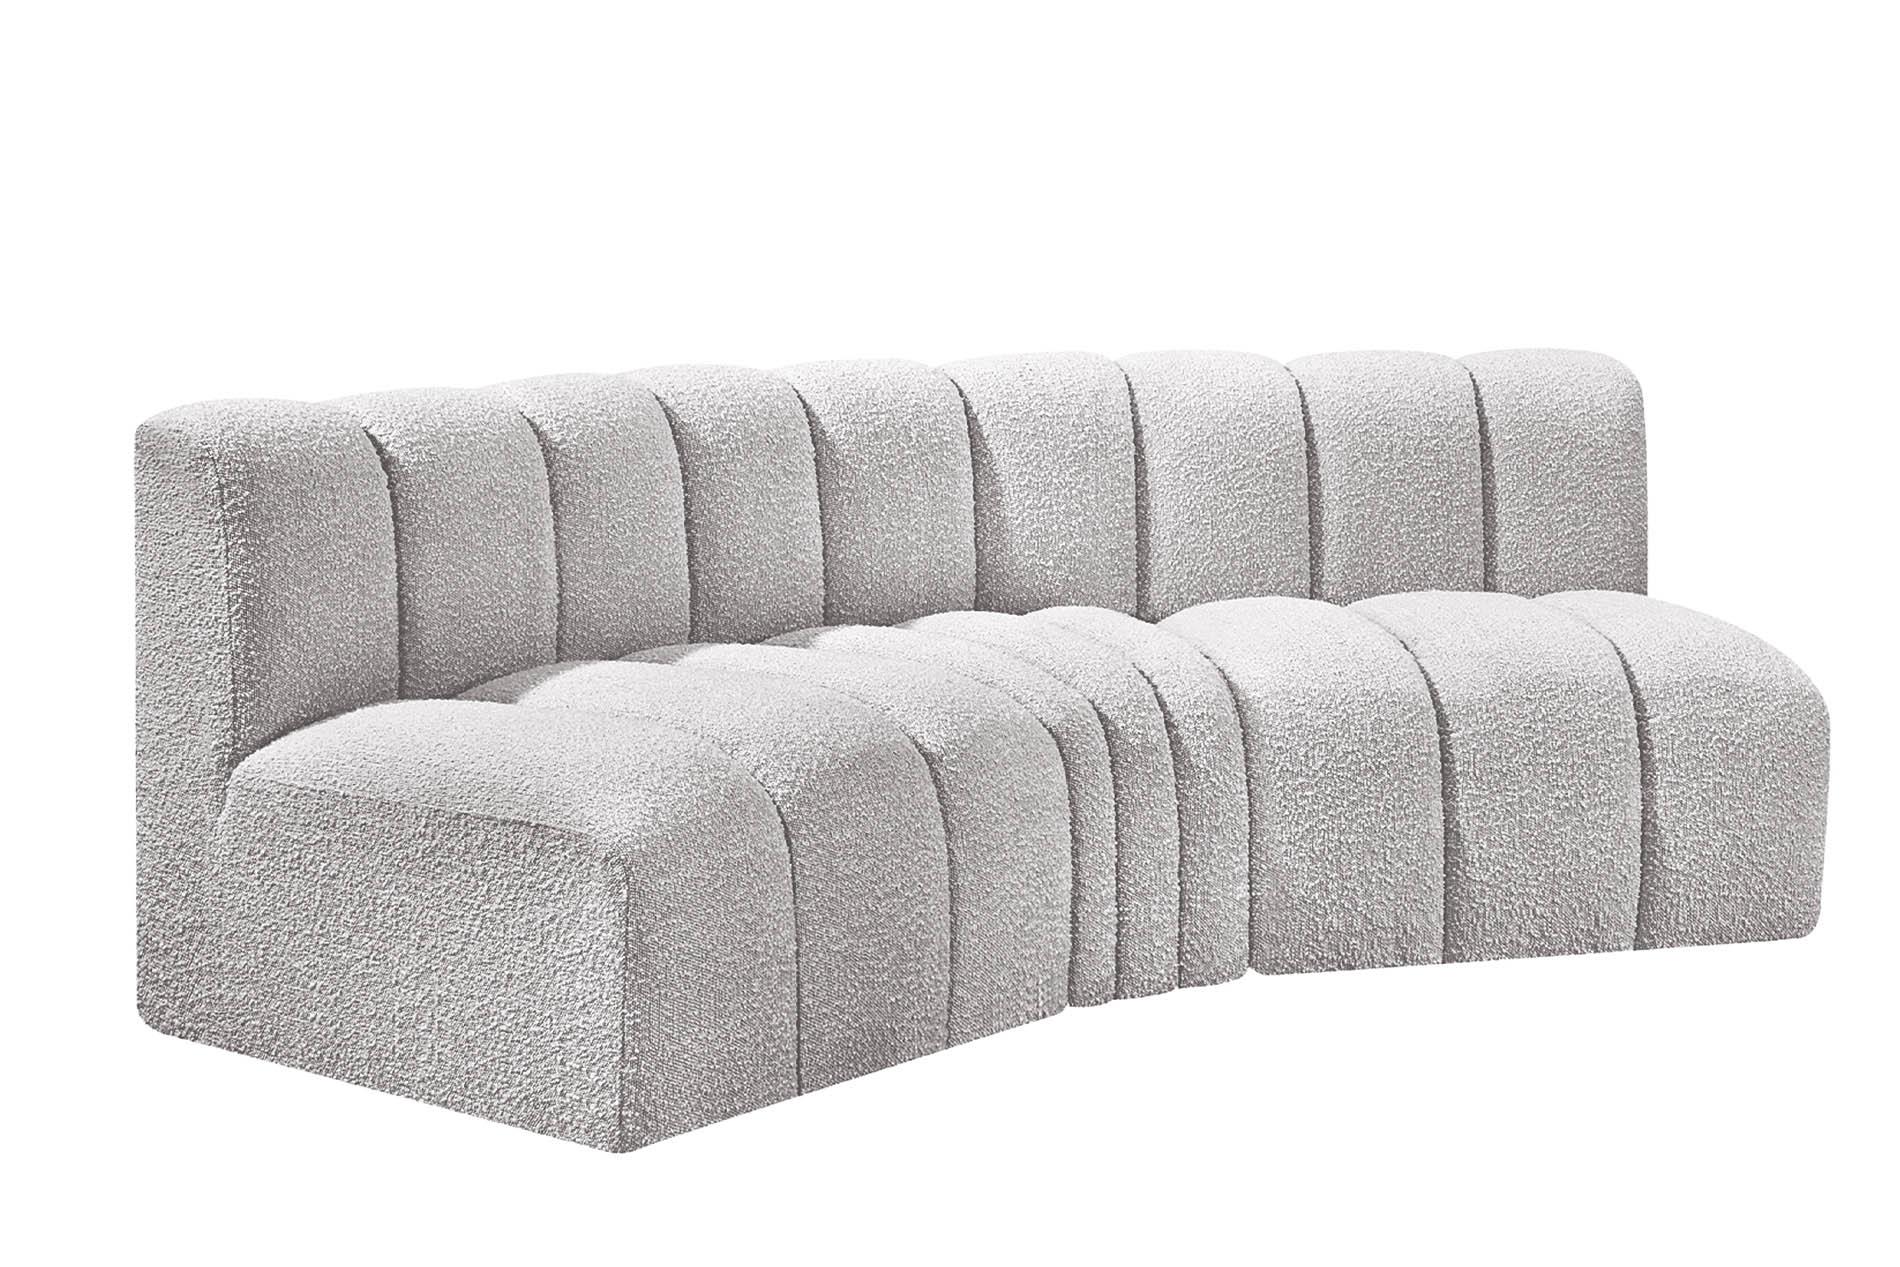 Contemporary, Modern Modular Sectional Sofa ARC 102Grey-S3B 102Grey-S3B in Gray 